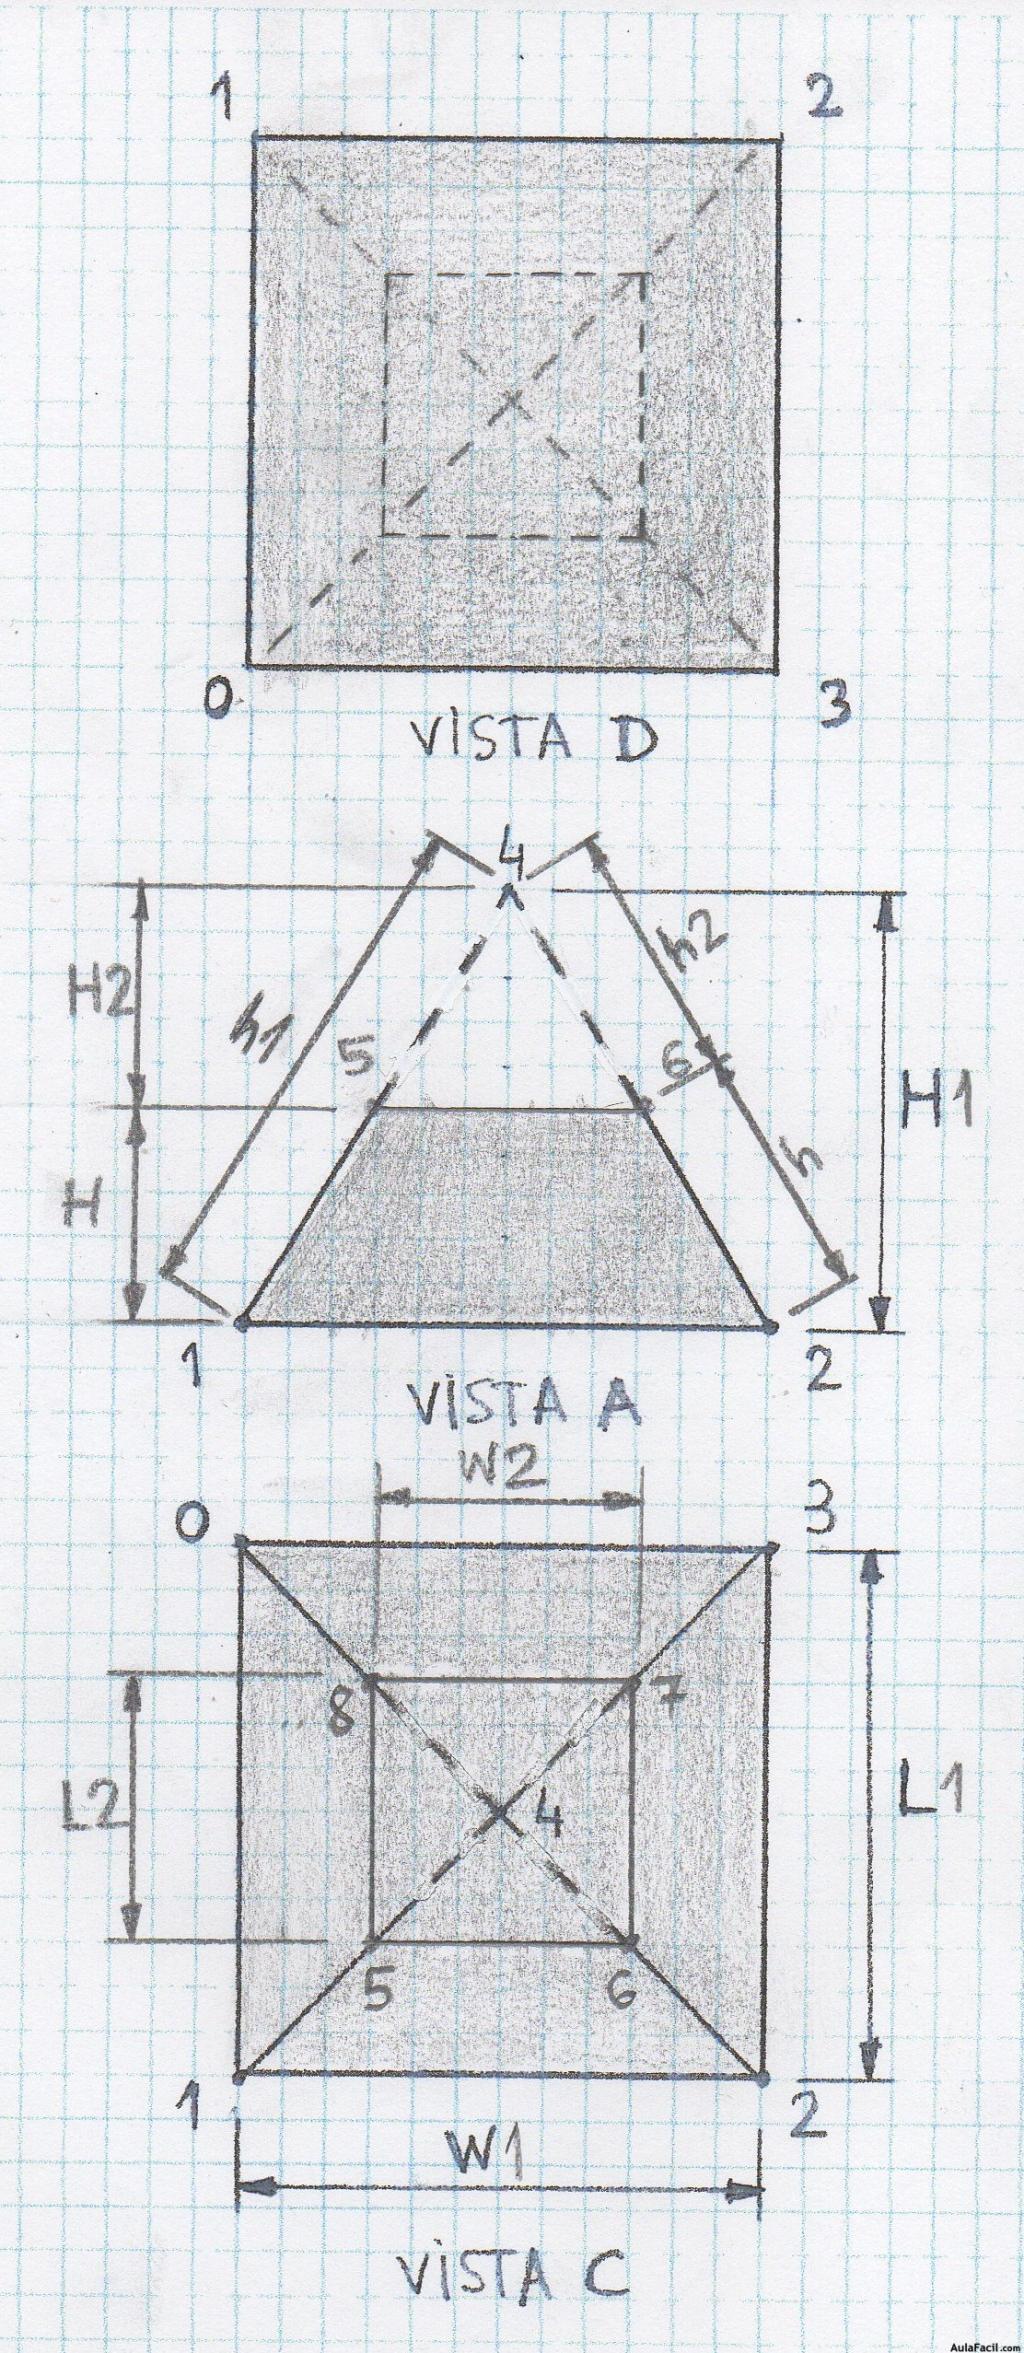 Vistas tronco pirámide recta base regular